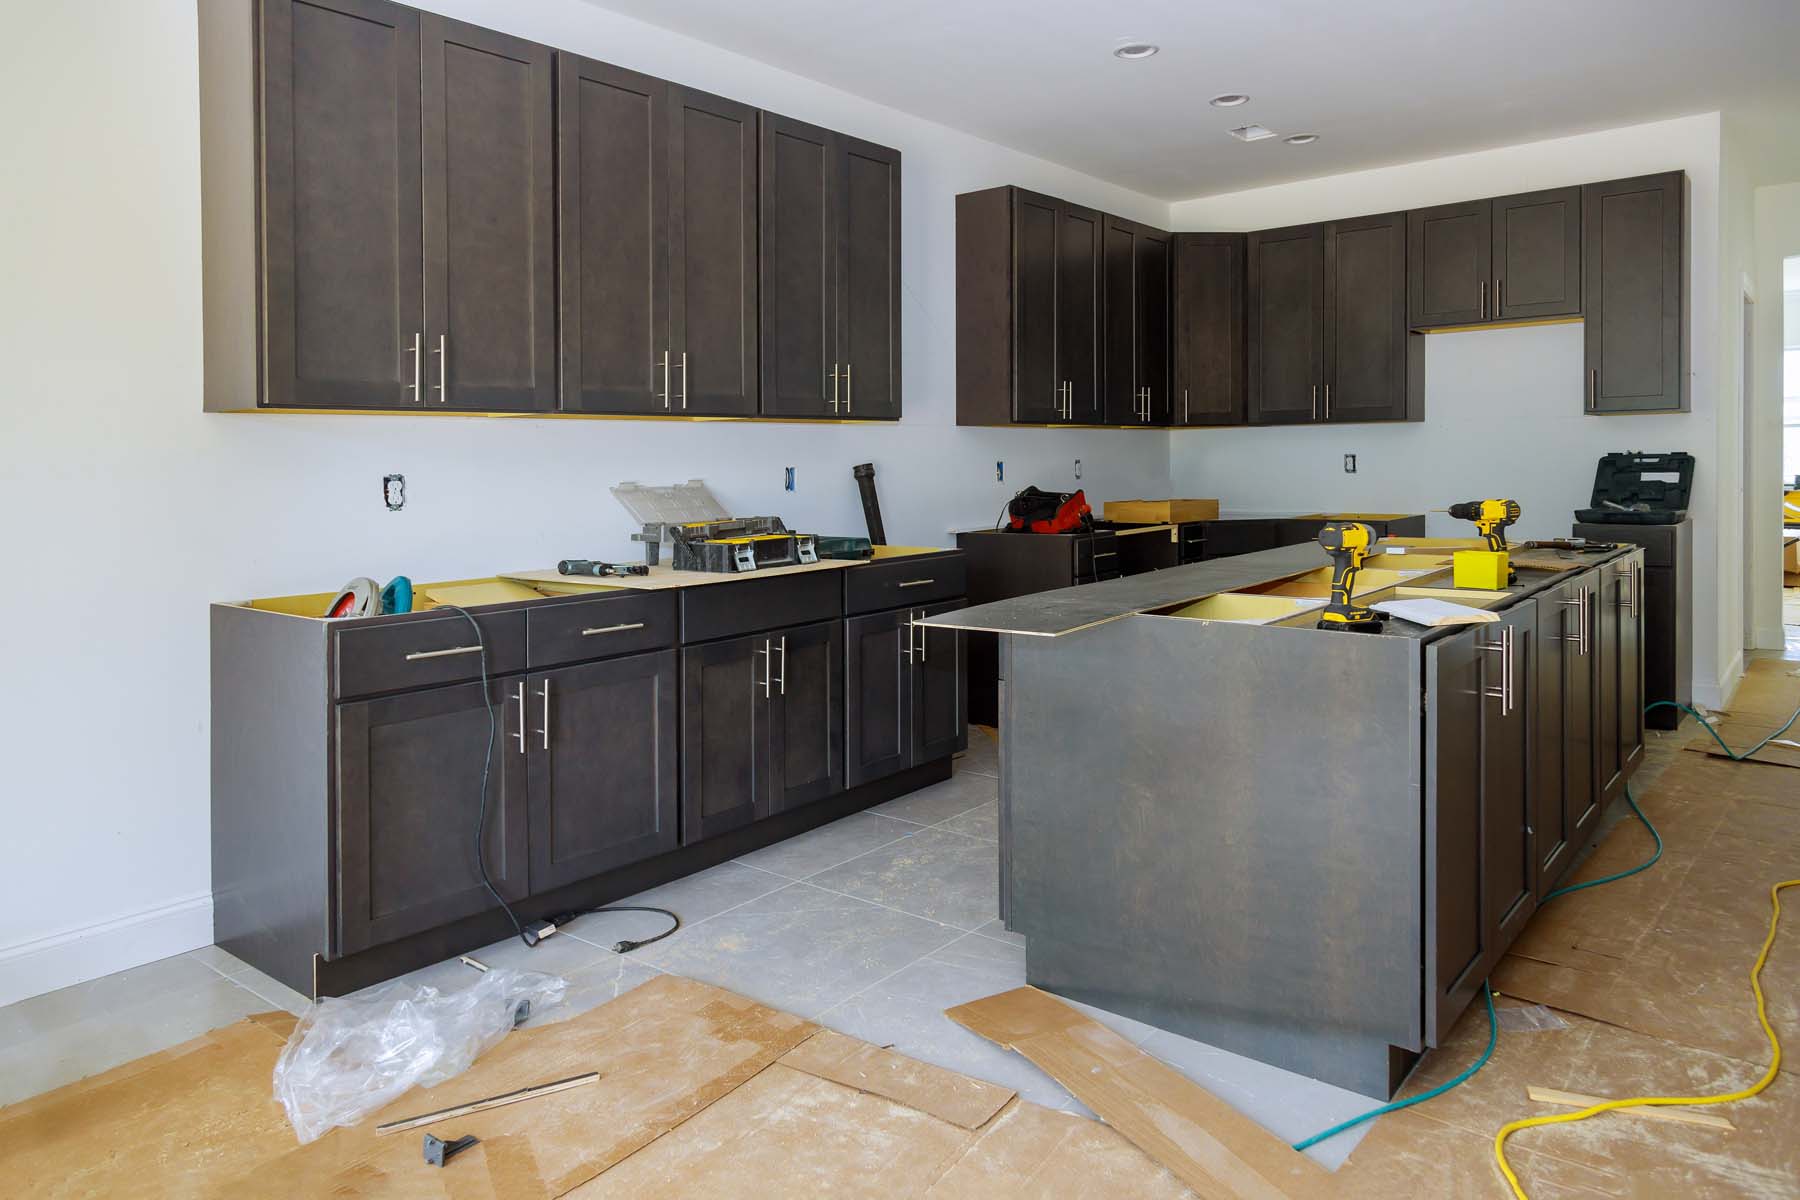 home-improvement-kitchen-view-installed-in-a-new-k-2022-11-12-10-38-39-utc.jpg